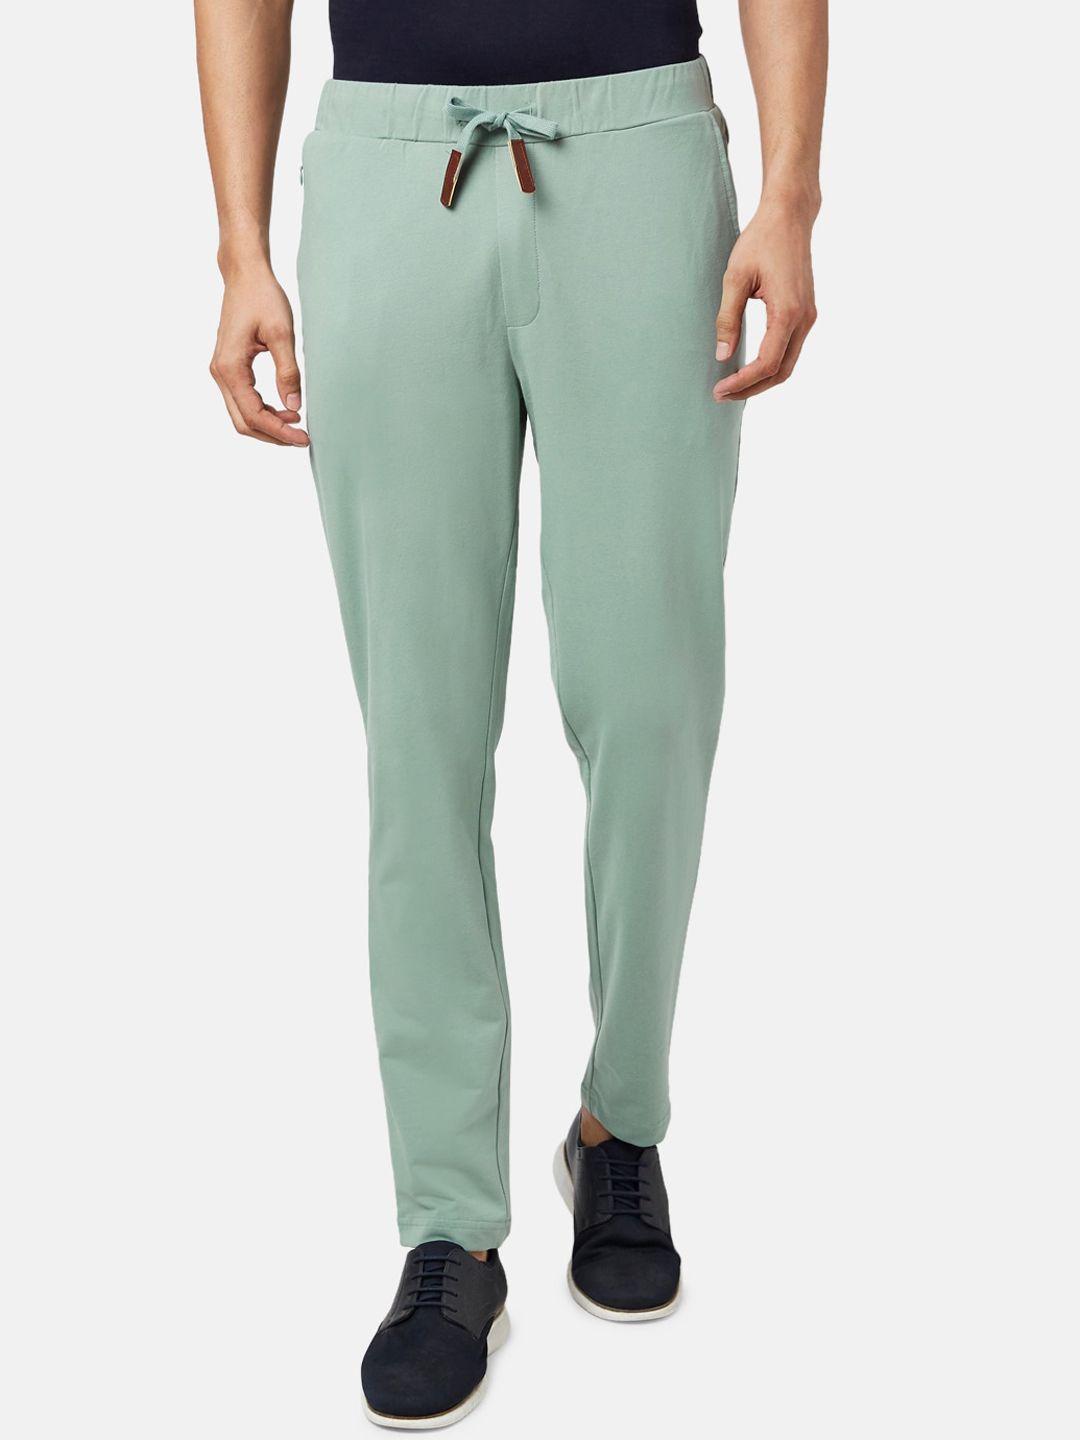 urban ranger by pantaloons men green slim fit trousers